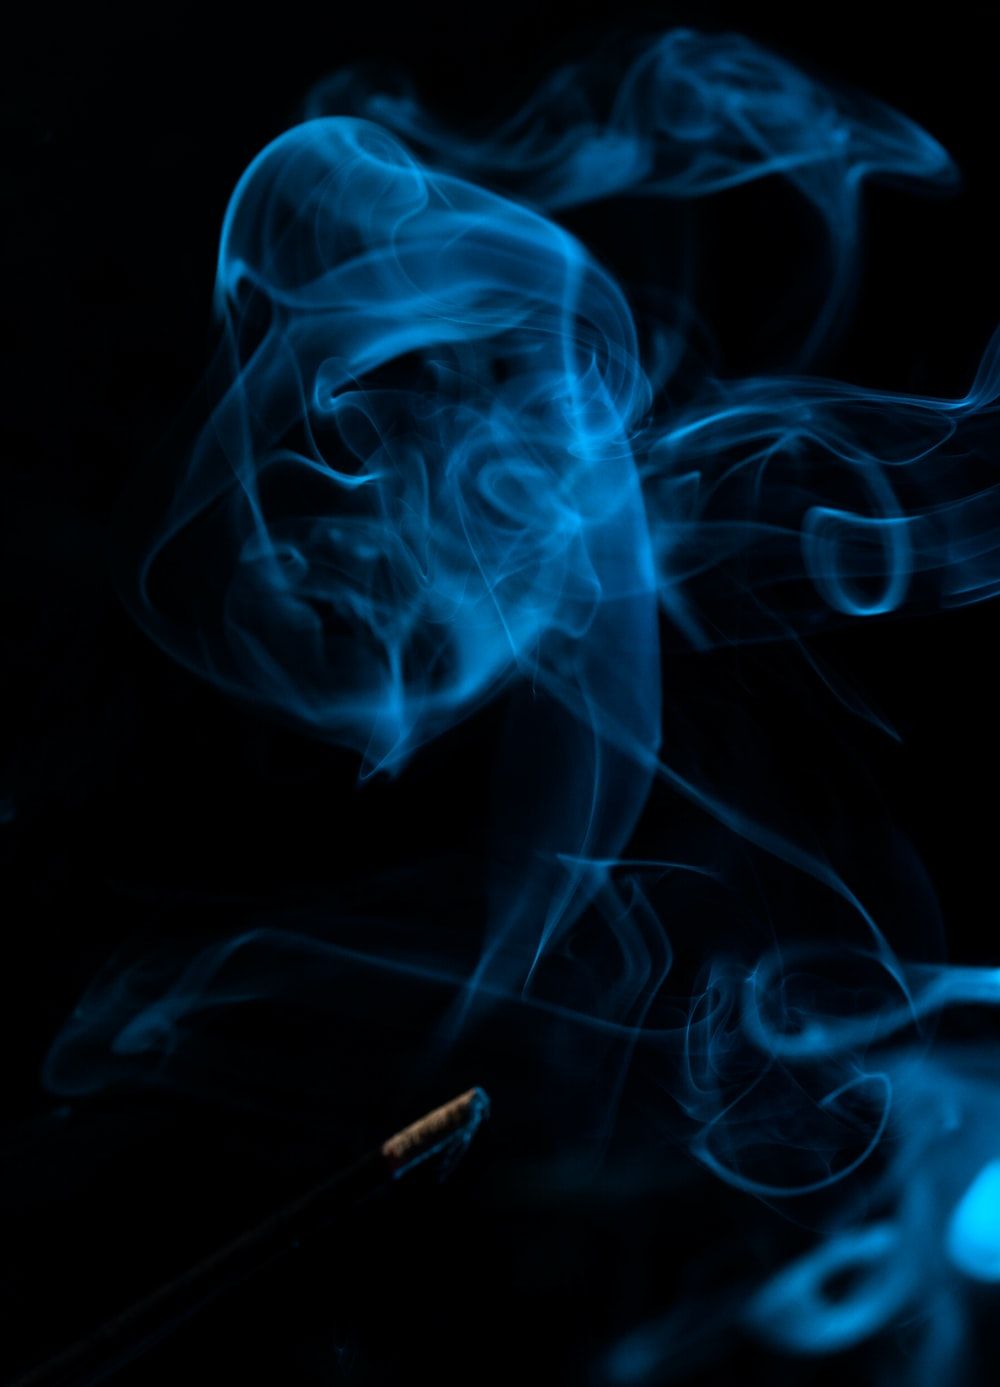 Blue Smoke Background. Download Free Image